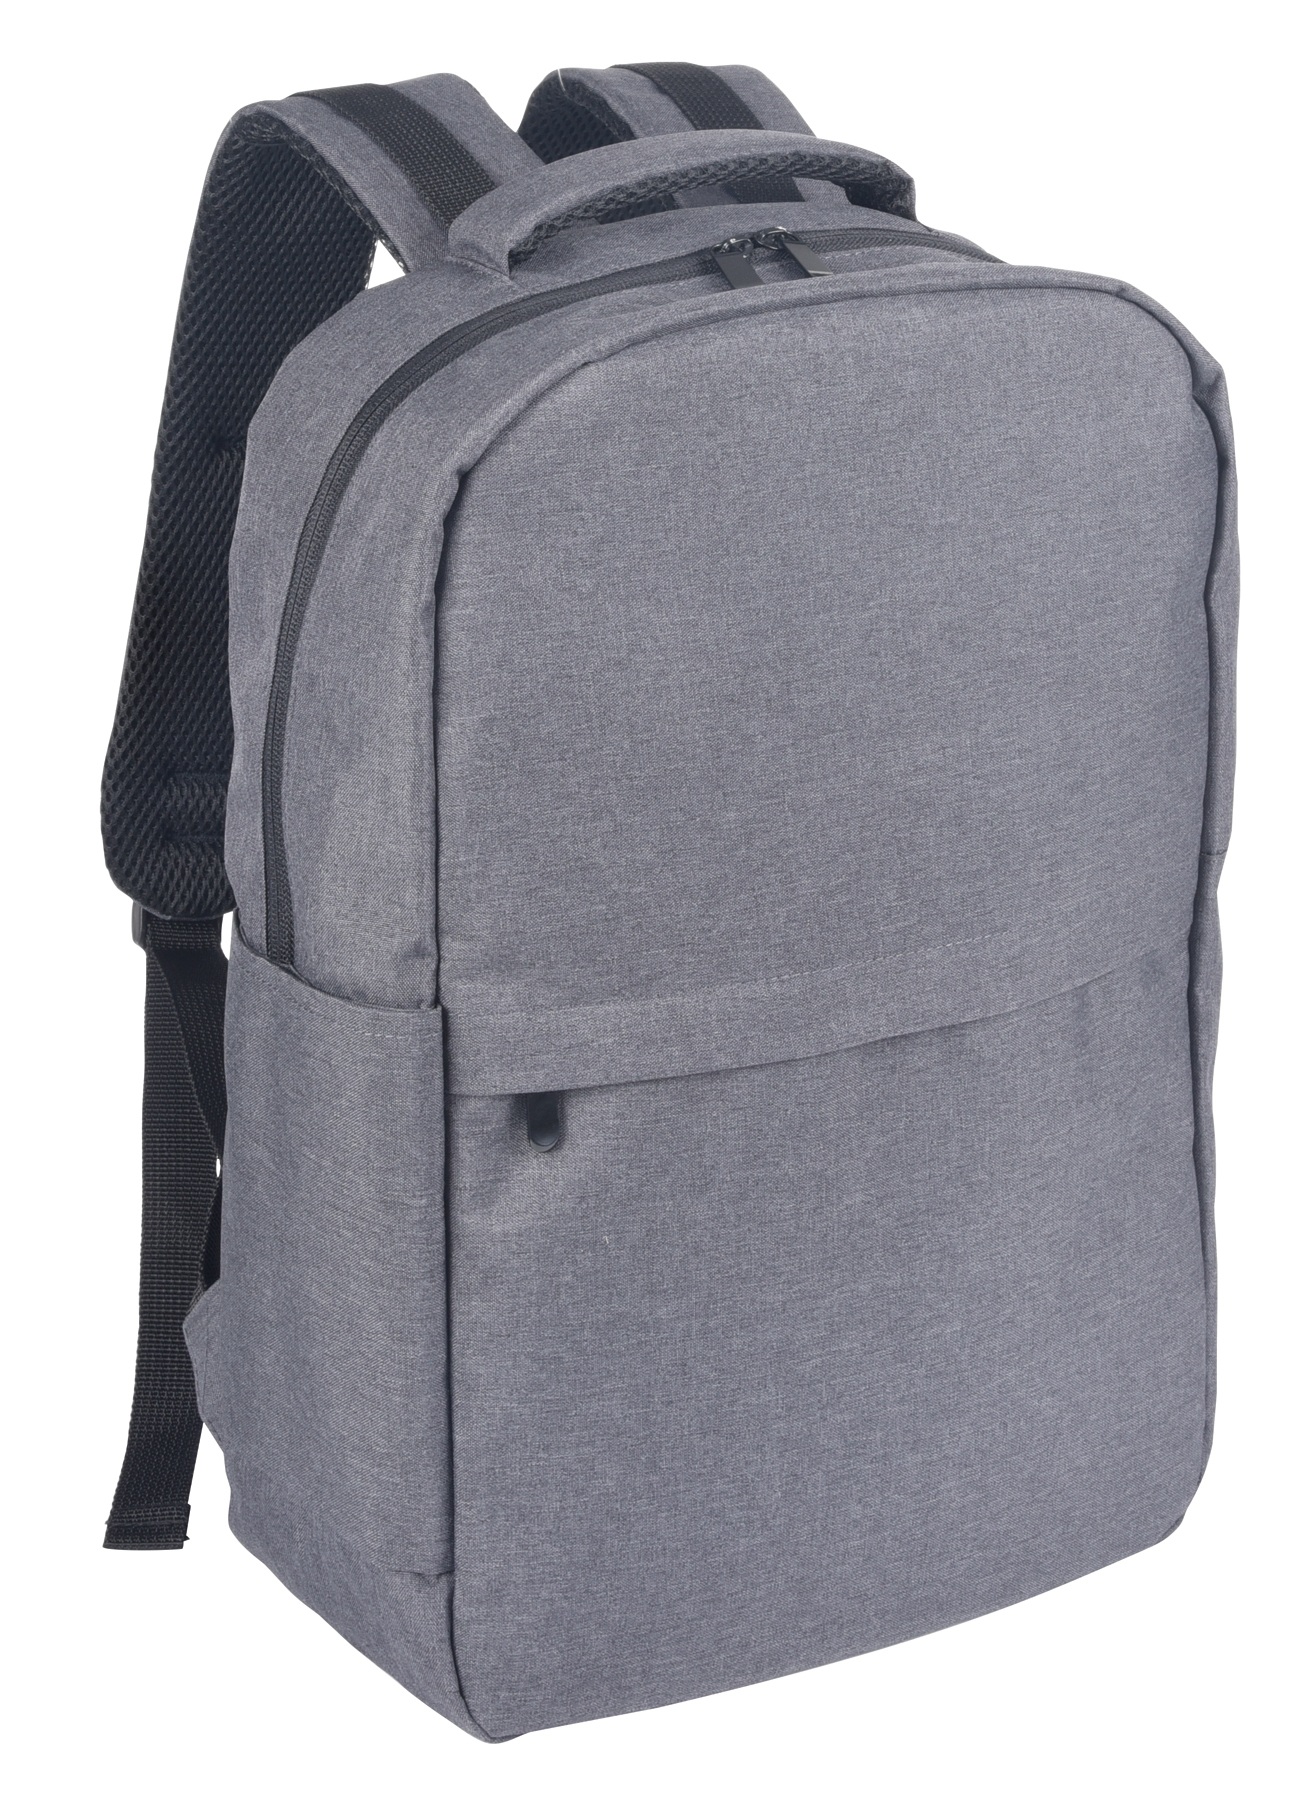 Backpack PRAGUE - stone grey